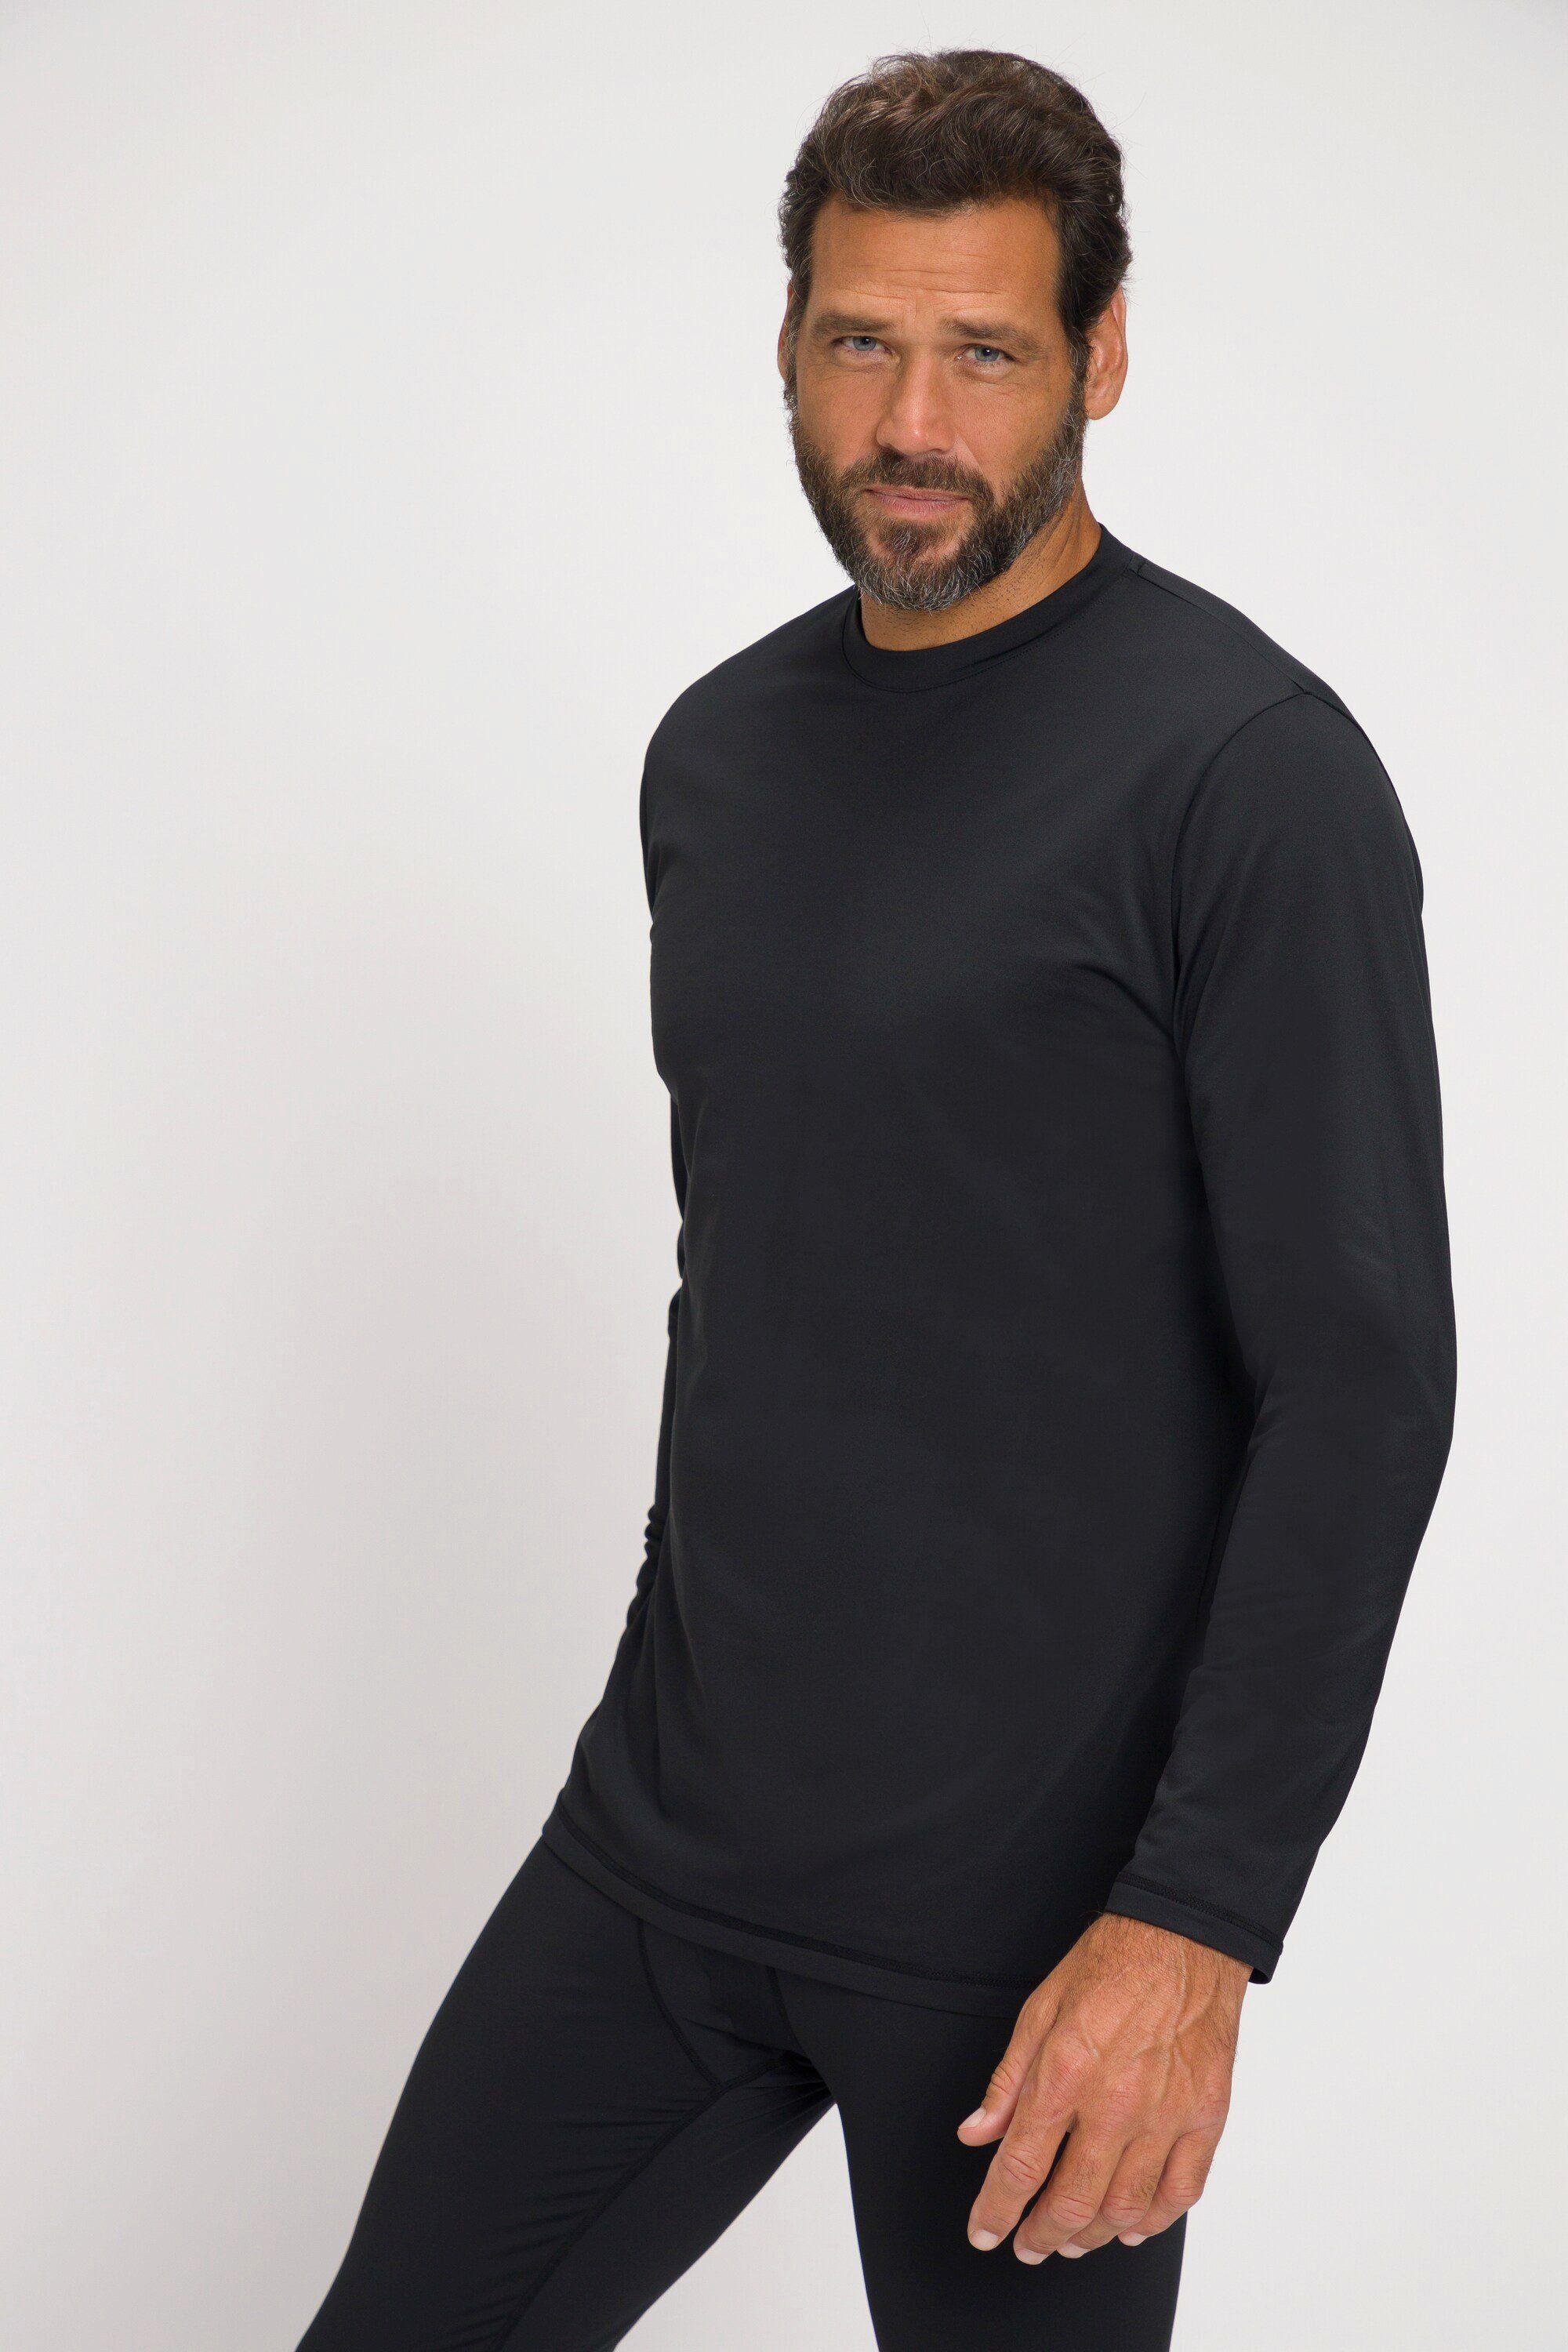 JP1880 Unterhemd Funktions-Unterhemd Skiwear Thermo Langarm schwarz